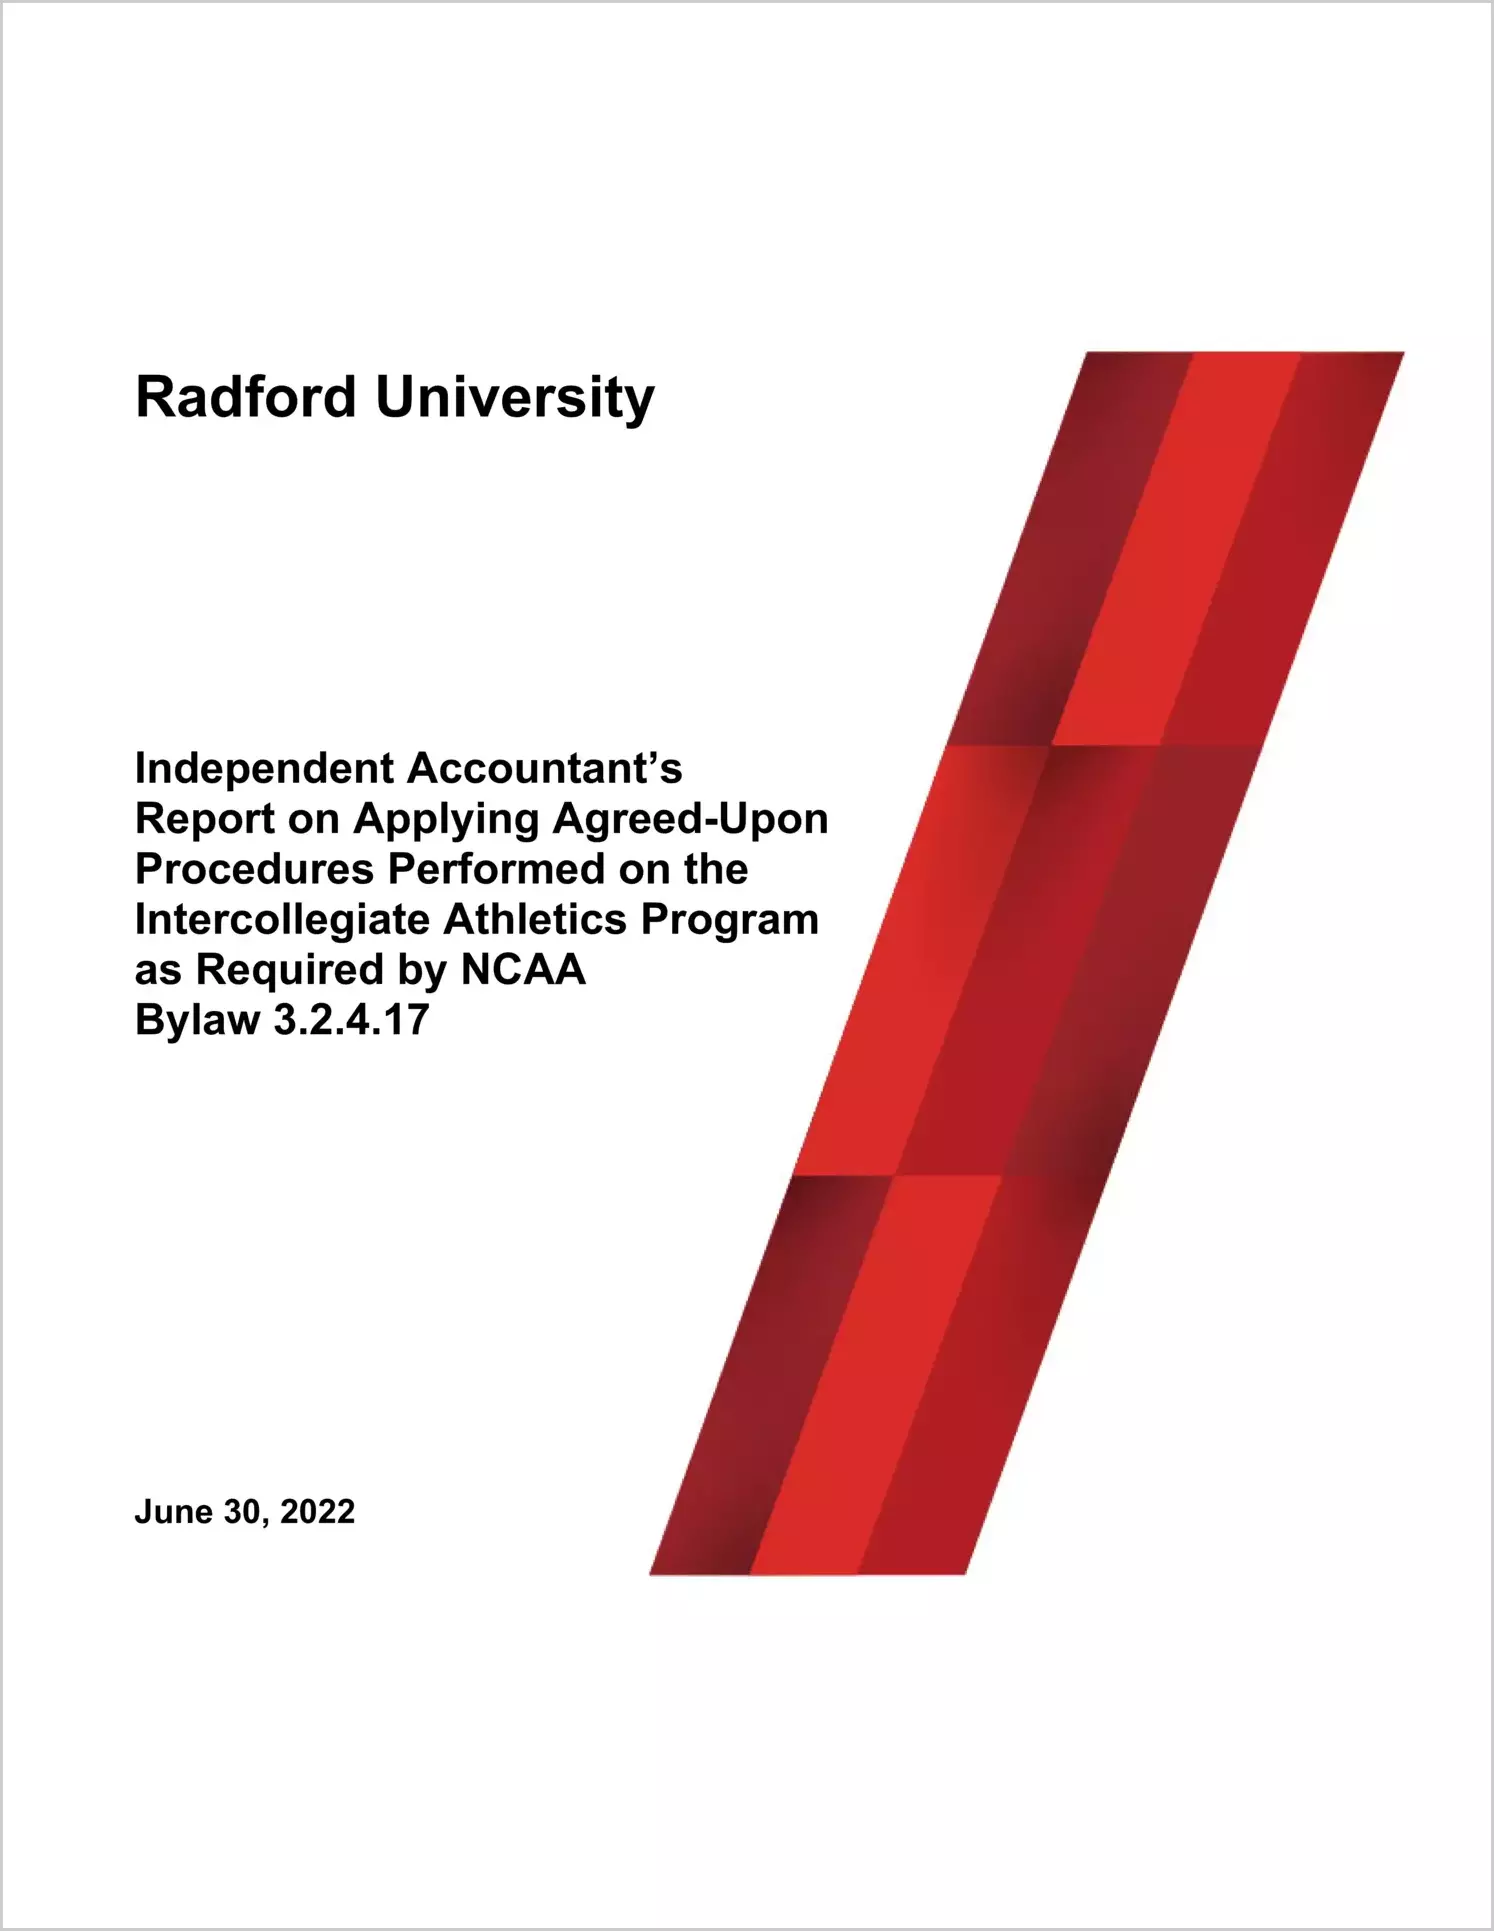 Radford University Intercollegiate Athletics Programs for the year ended June 30, 2022